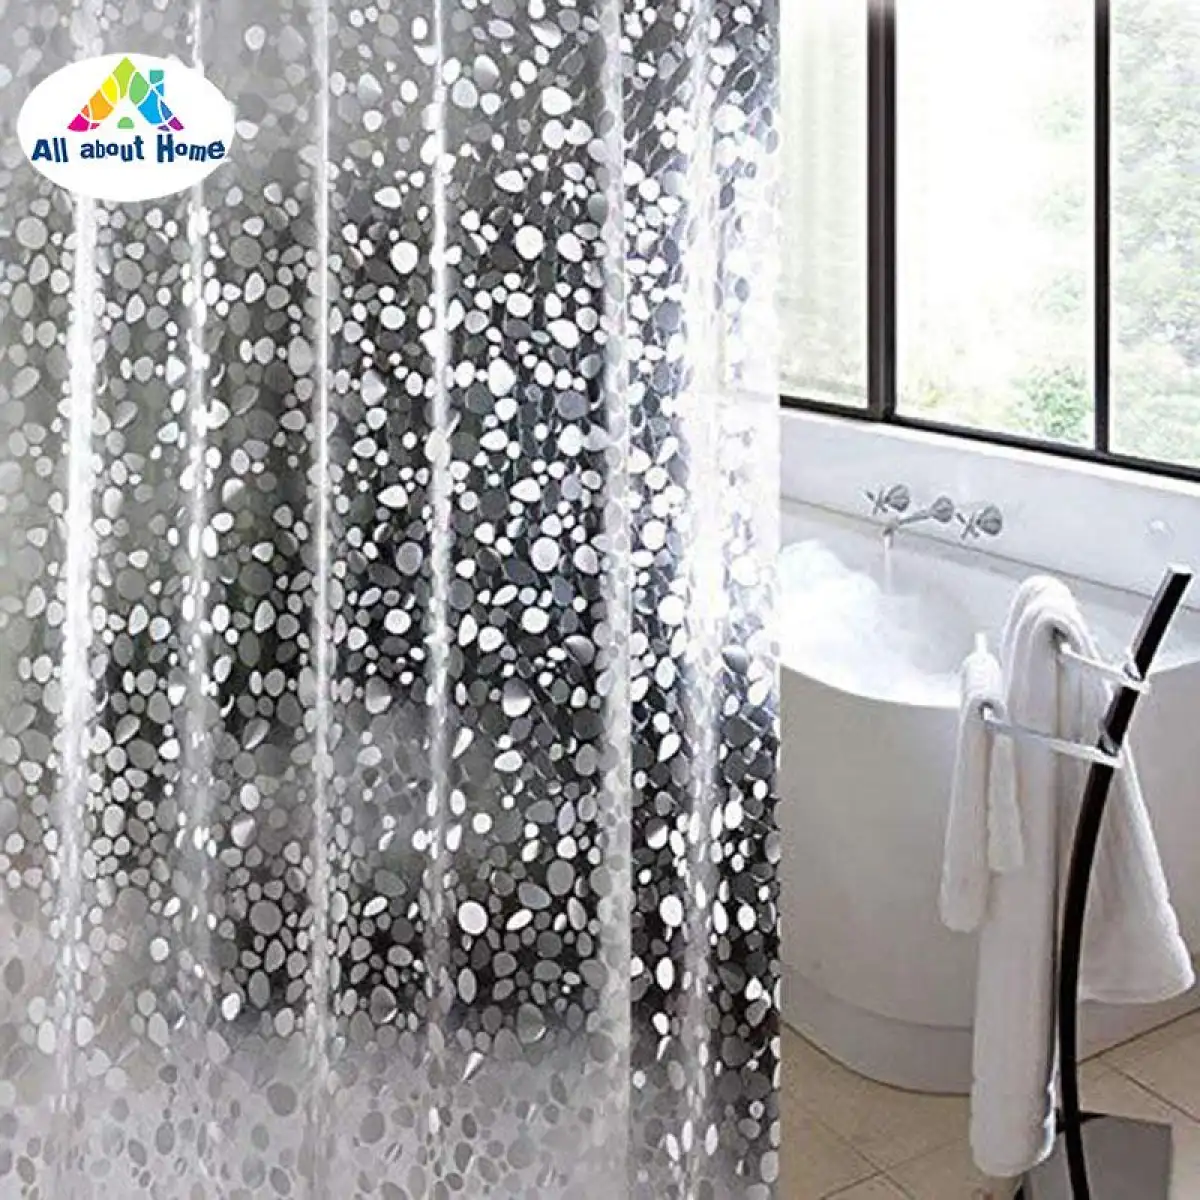 Abh Cobblestone Shower Curtain Anti, How To Hem A Shower Curtain